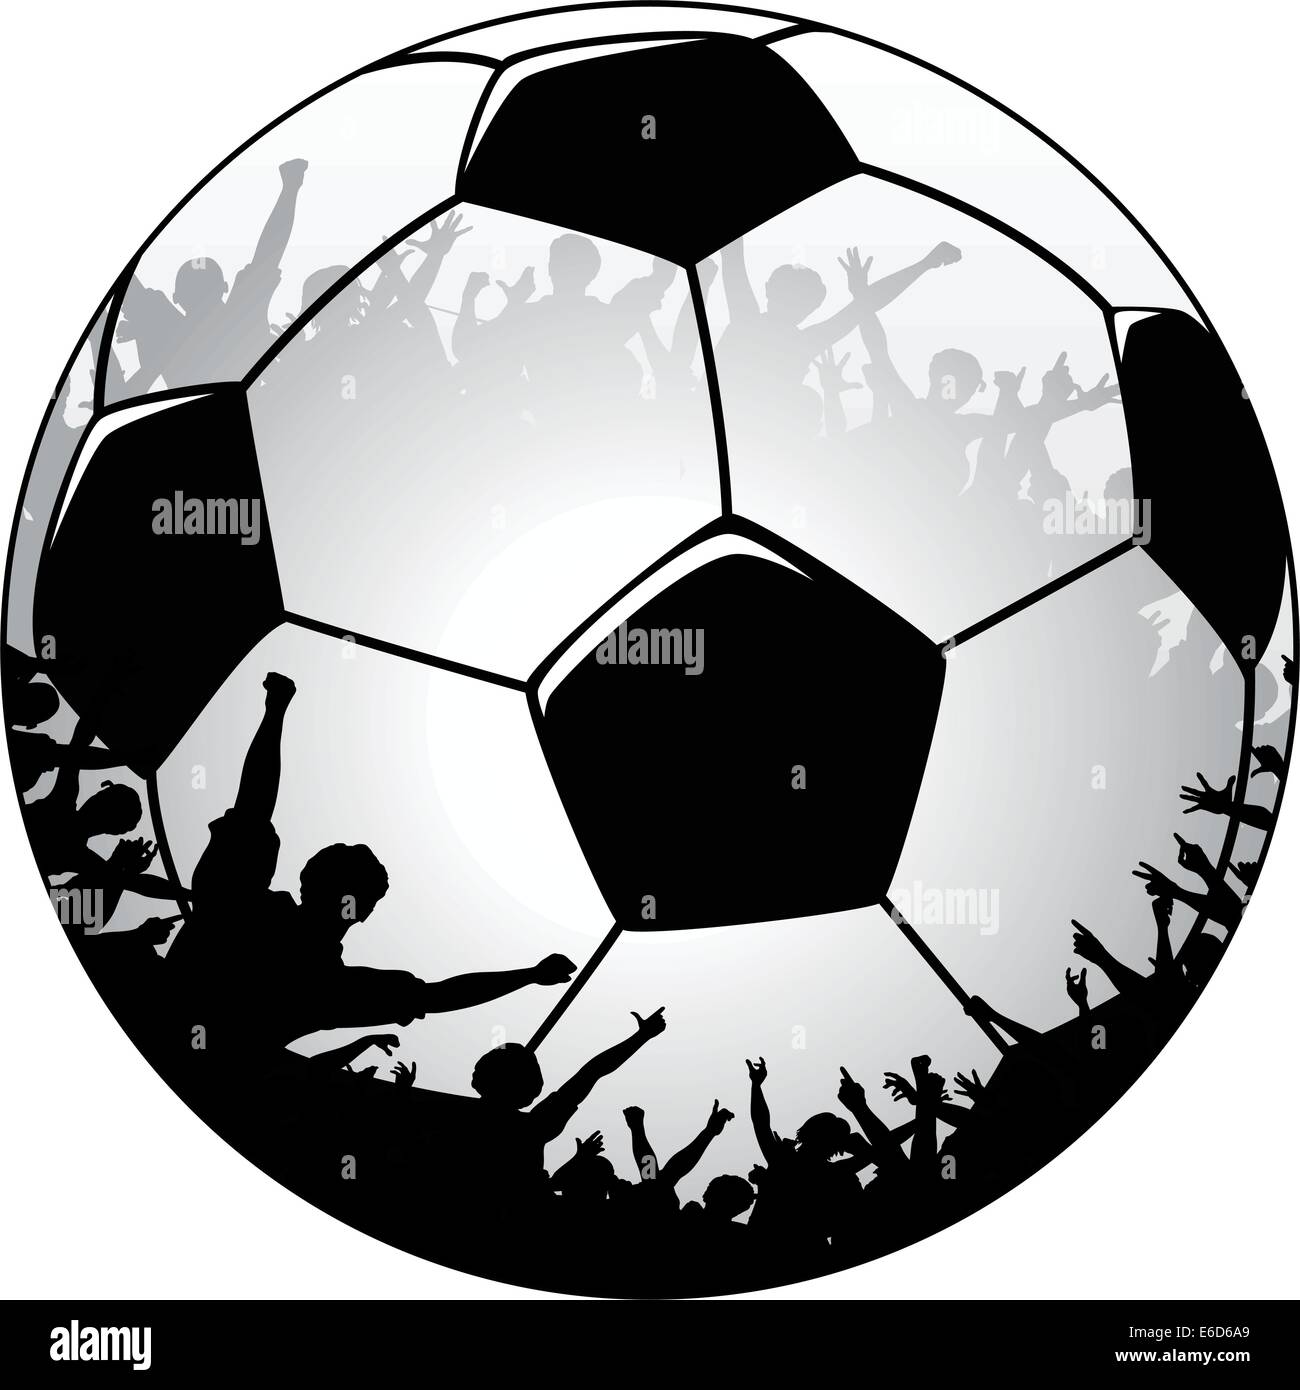 Bearbeitbares Vektor-Illustration eines Fußballs mit jubelnden Menge Stock Vektor